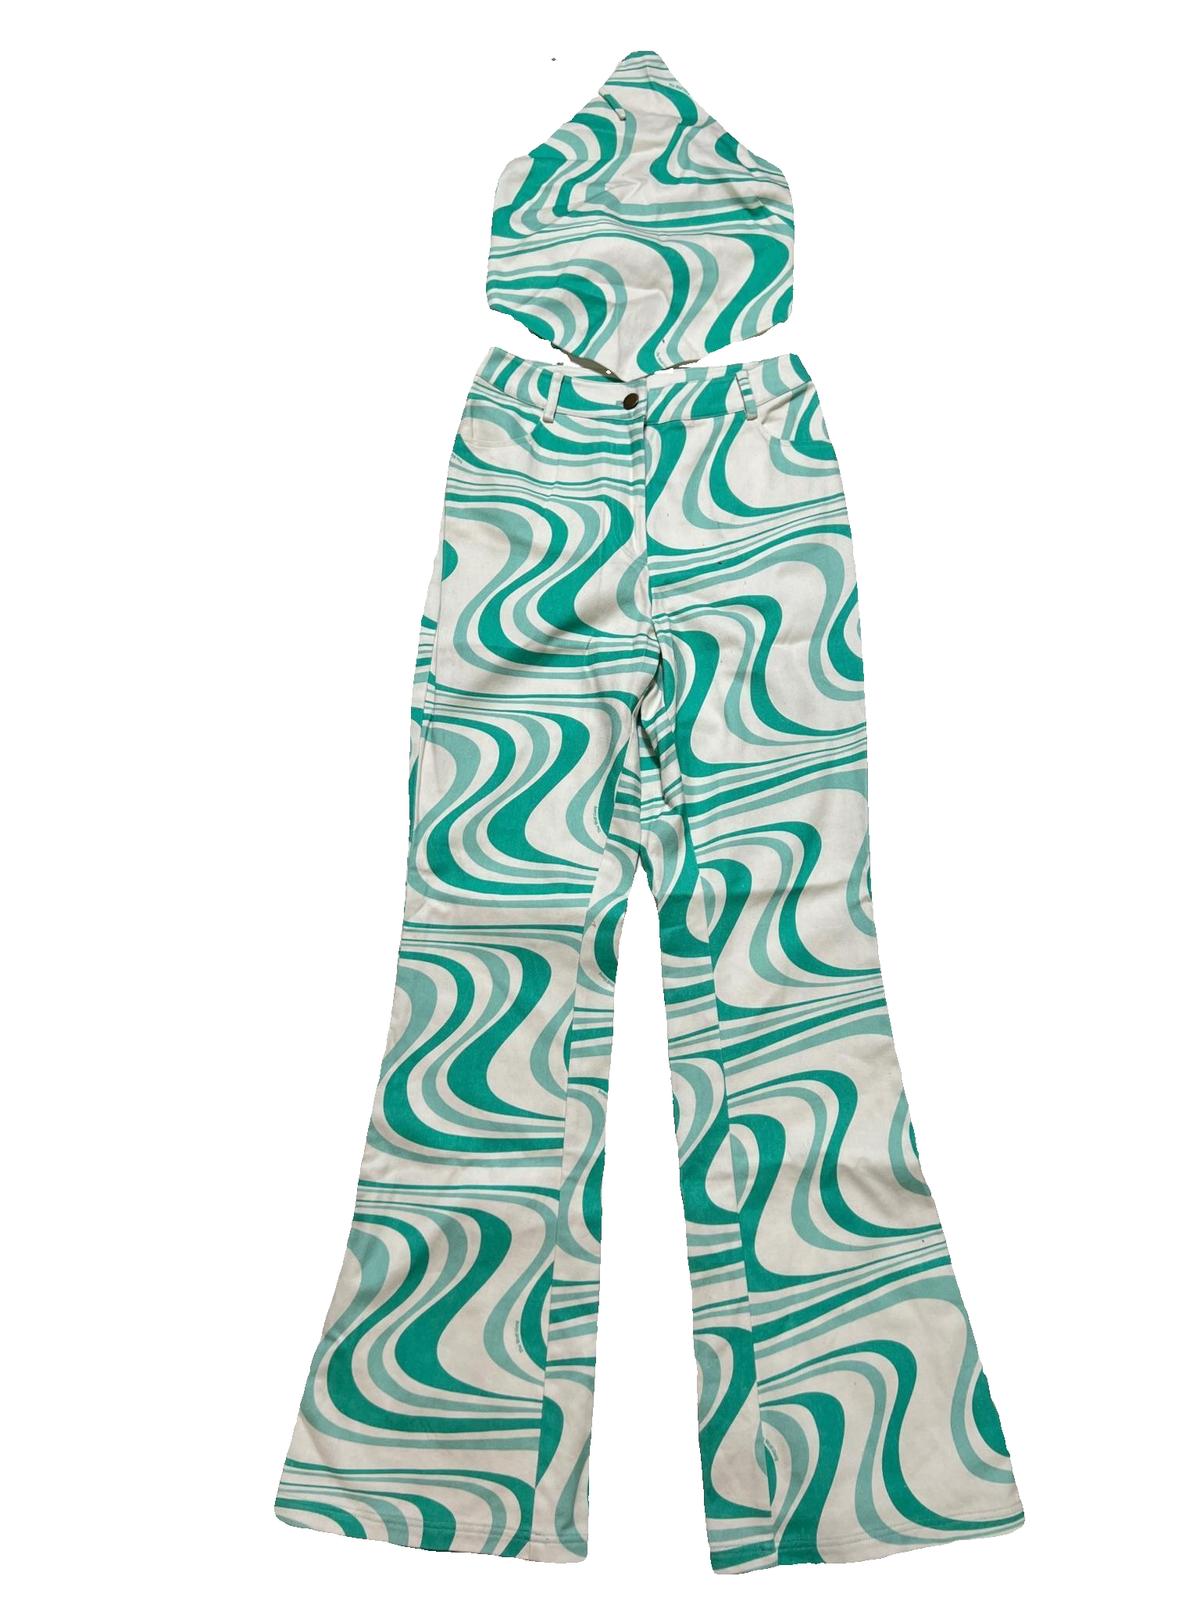 The Wolf Gang- Green Swirl Matching Pant Set